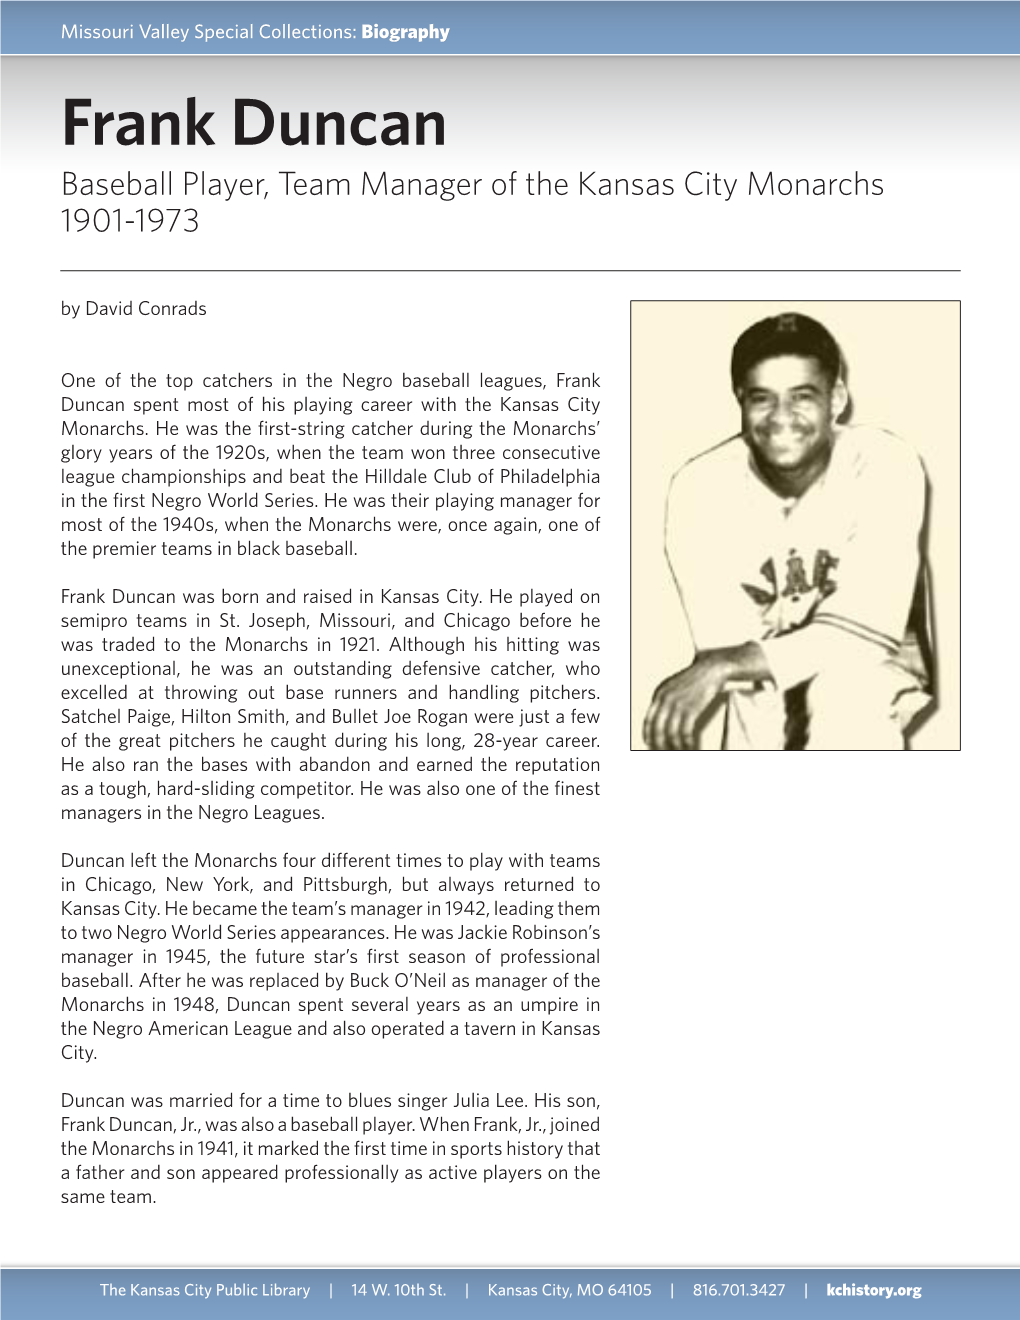 Frank Duncan Baseball Player, Team Manager of the Kansas City Monarchs 1901-1973